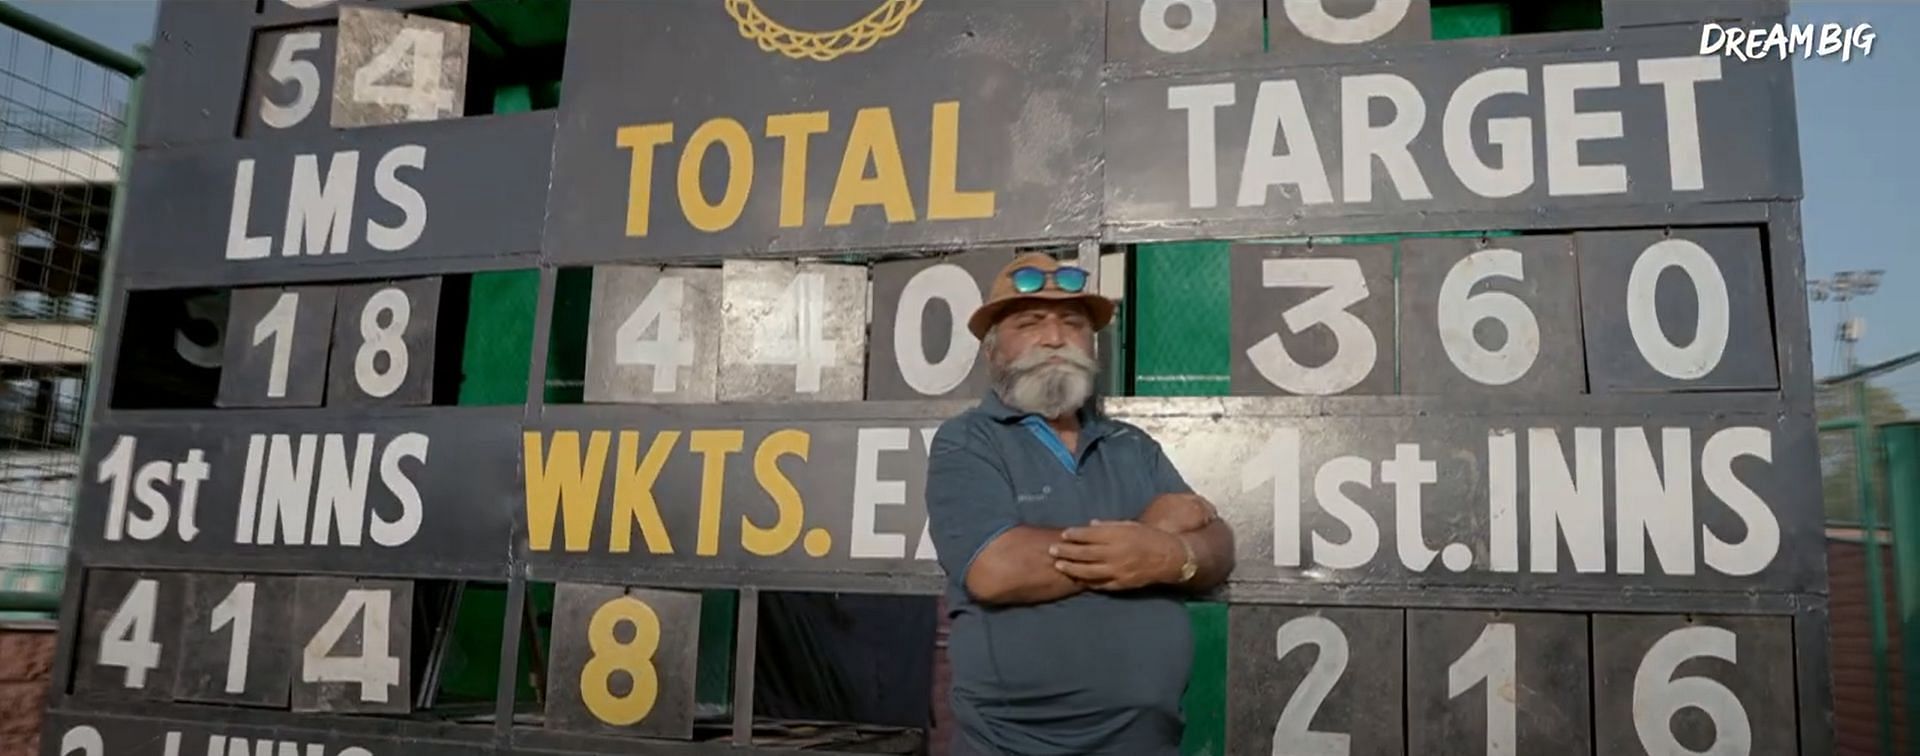 Pradeep Kumar is the manual scoreboard operator at the Delhi &amp; District Cricket Association (DDCA).